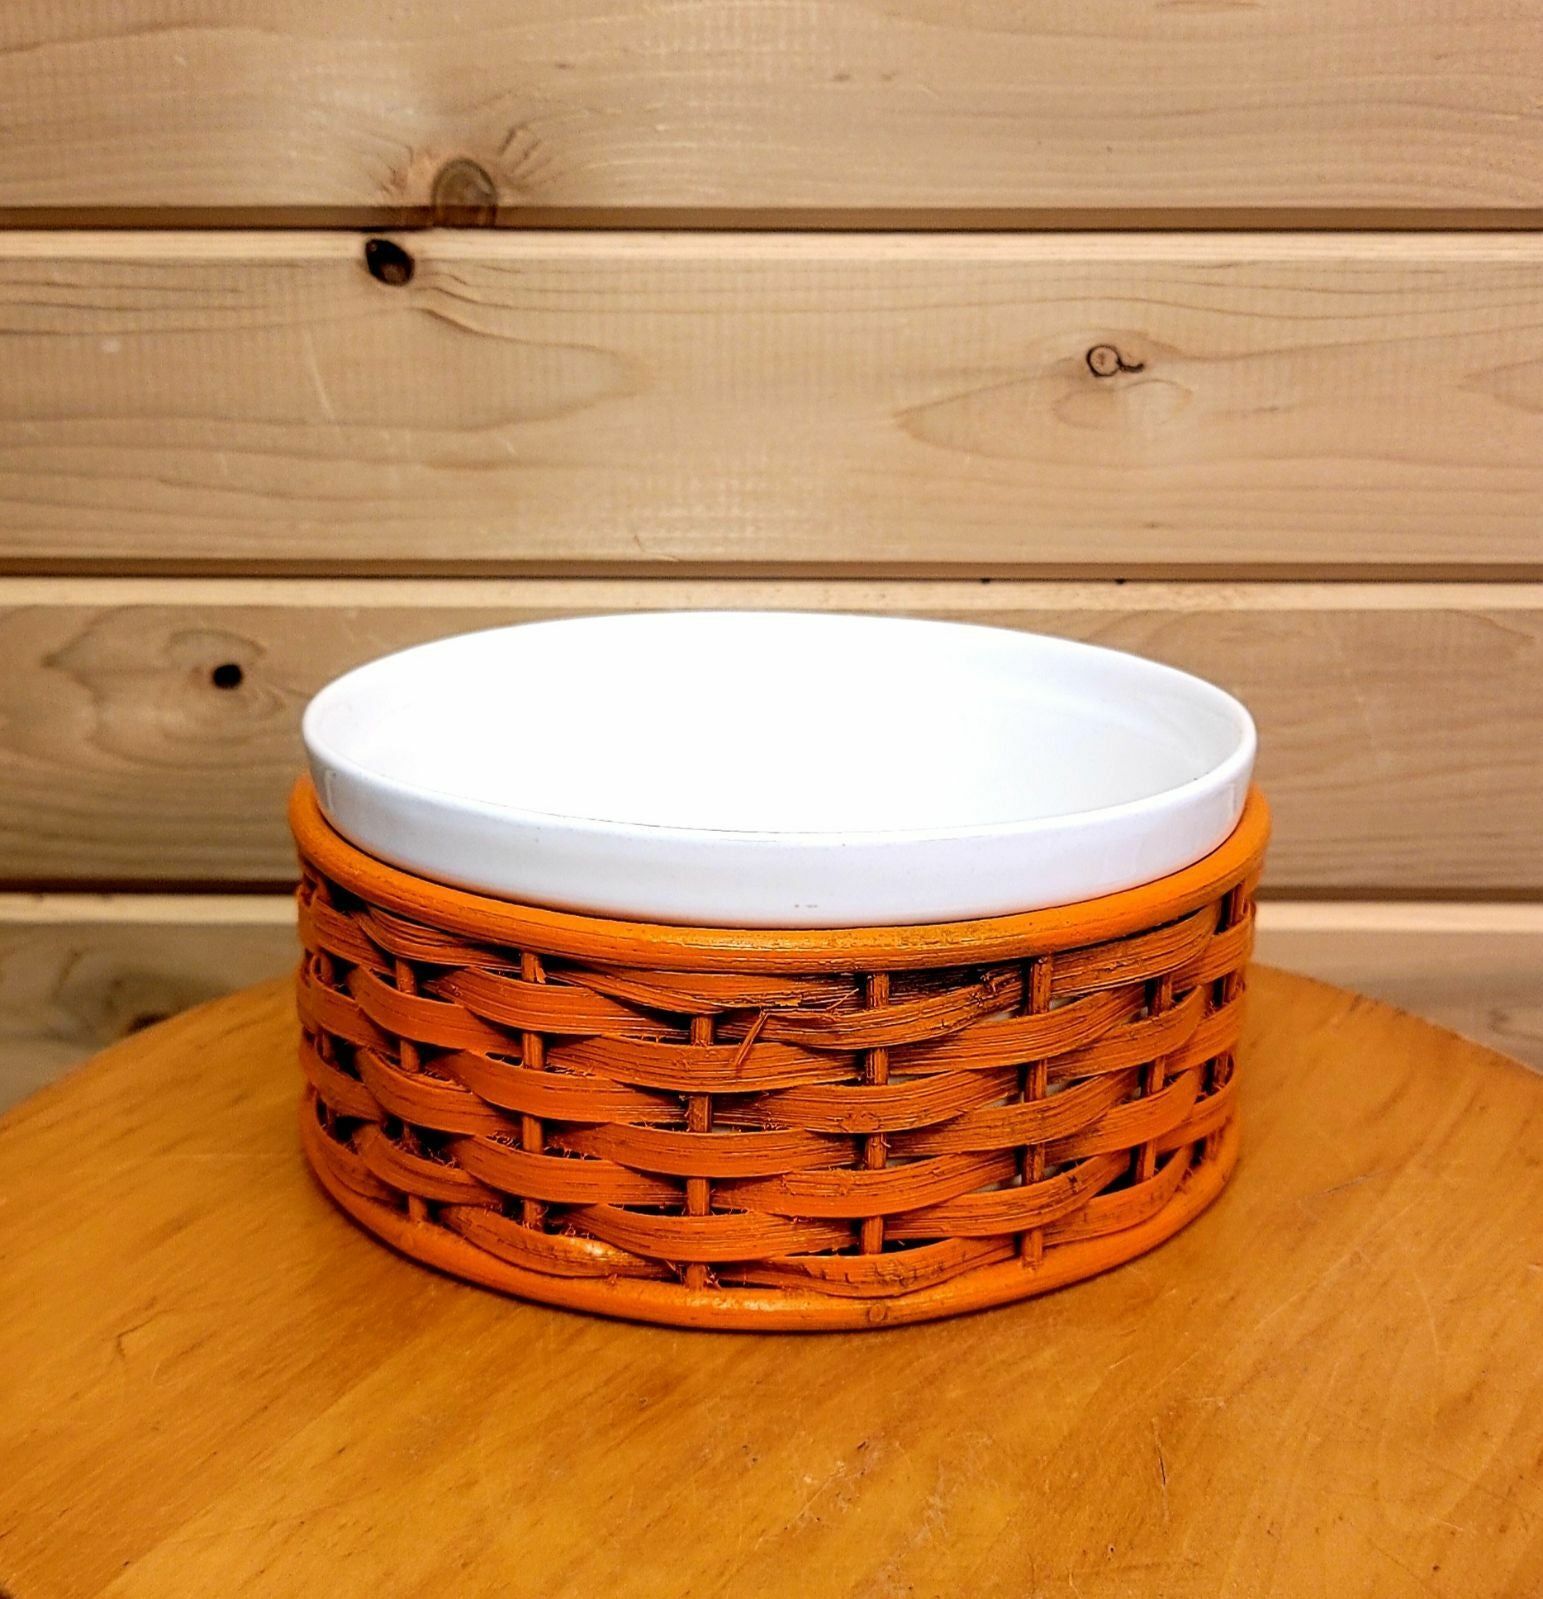 Ovenproof Bakeware Dish In Orange Wicker Serving Bowl